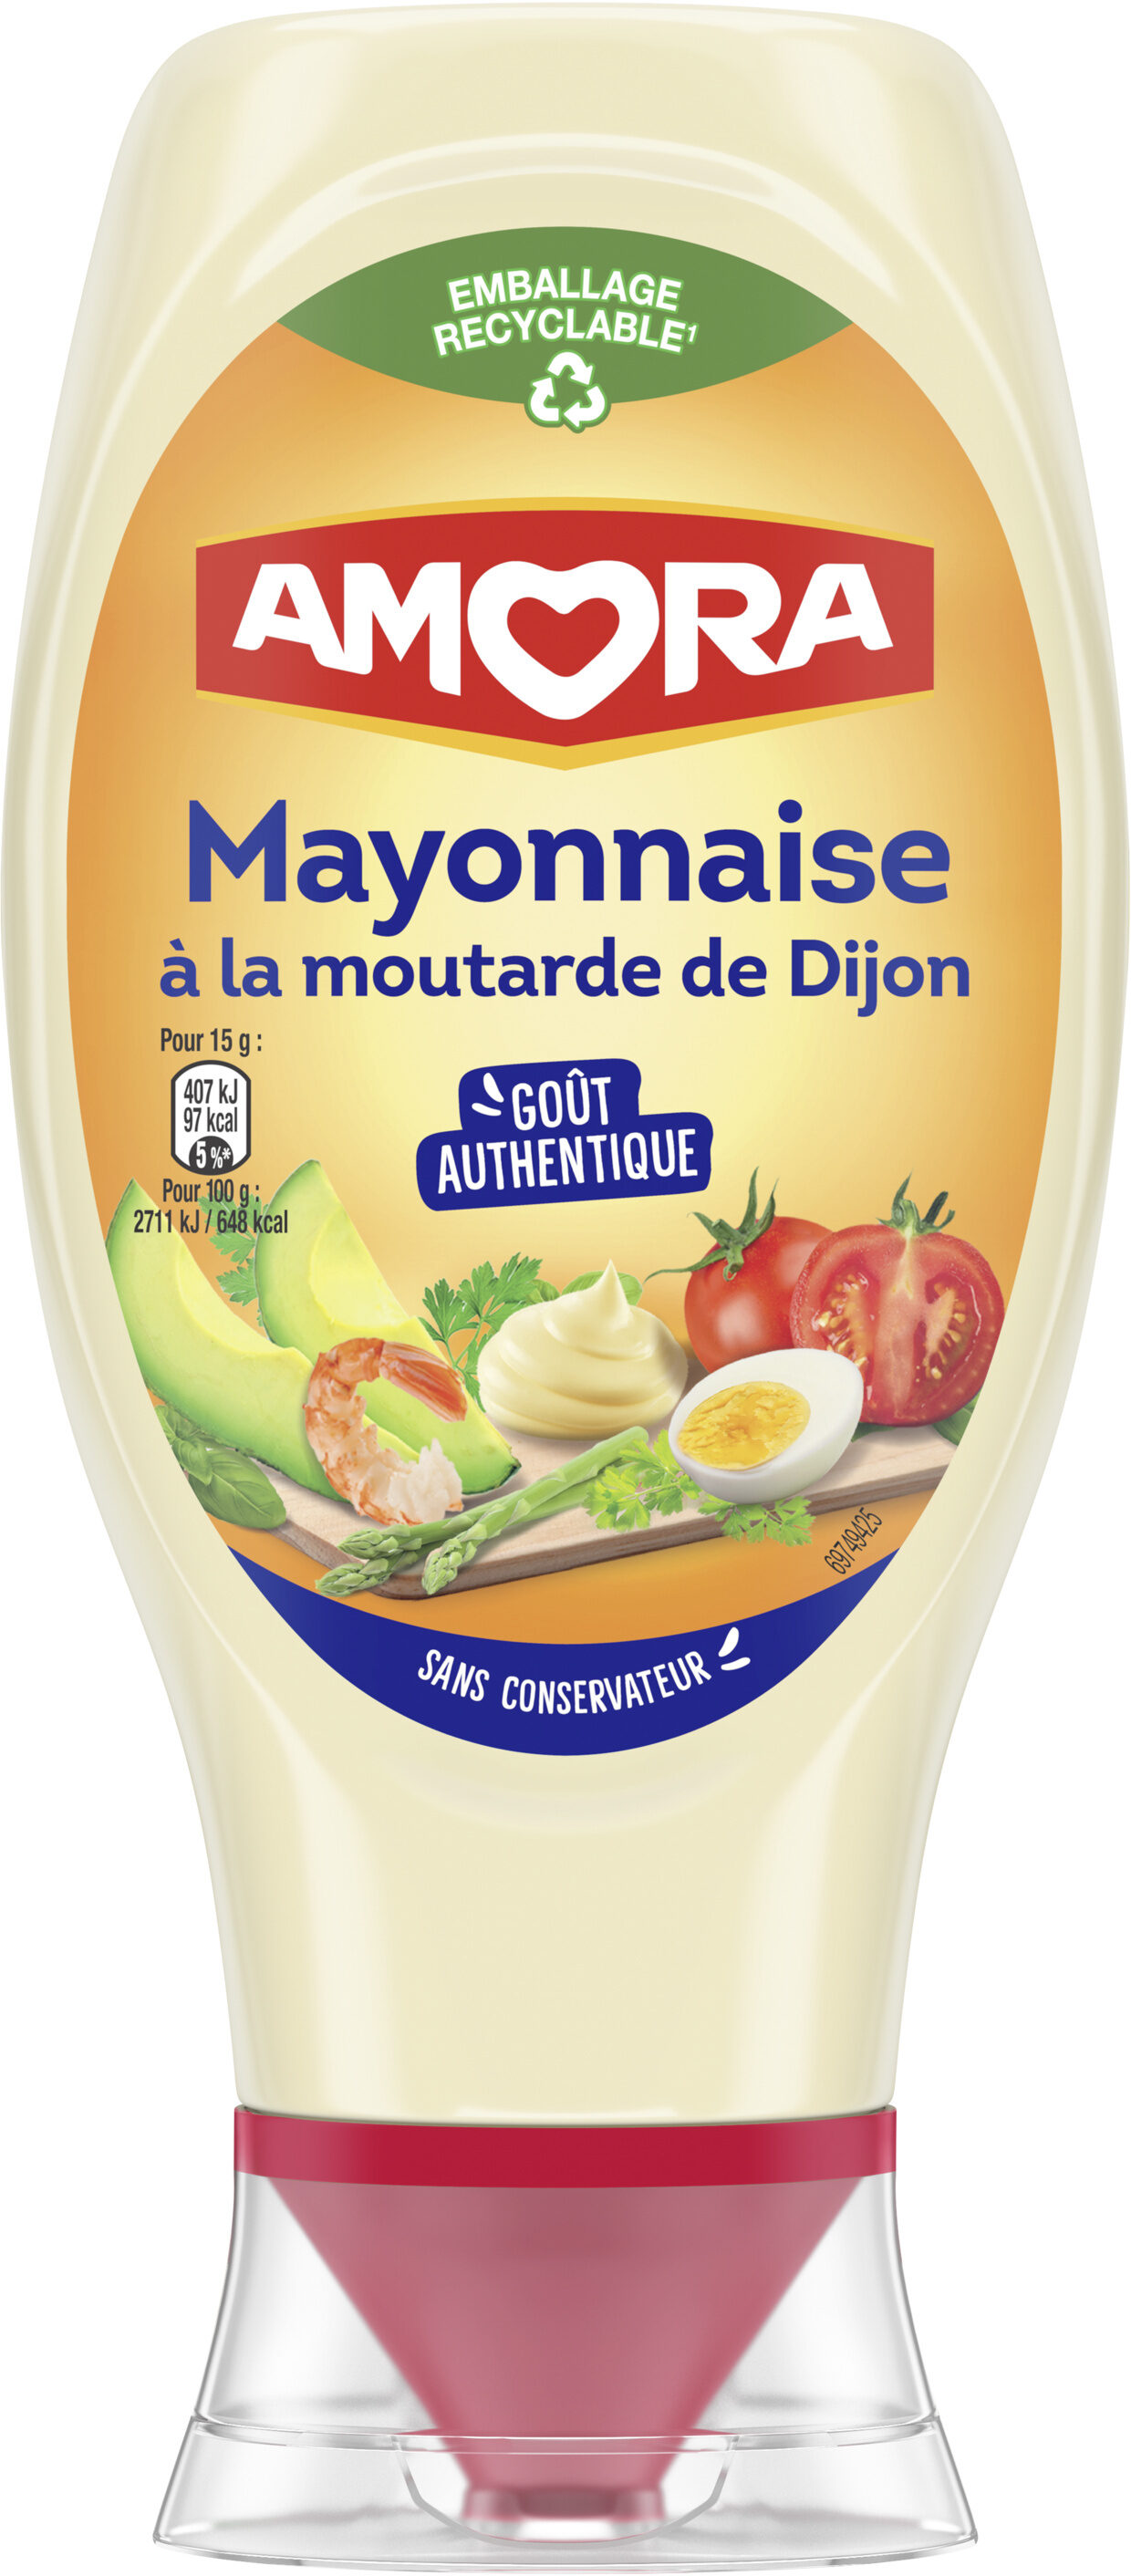 Amora Mayonnaise De Dijon Flacon Souple 415g - Product - fr